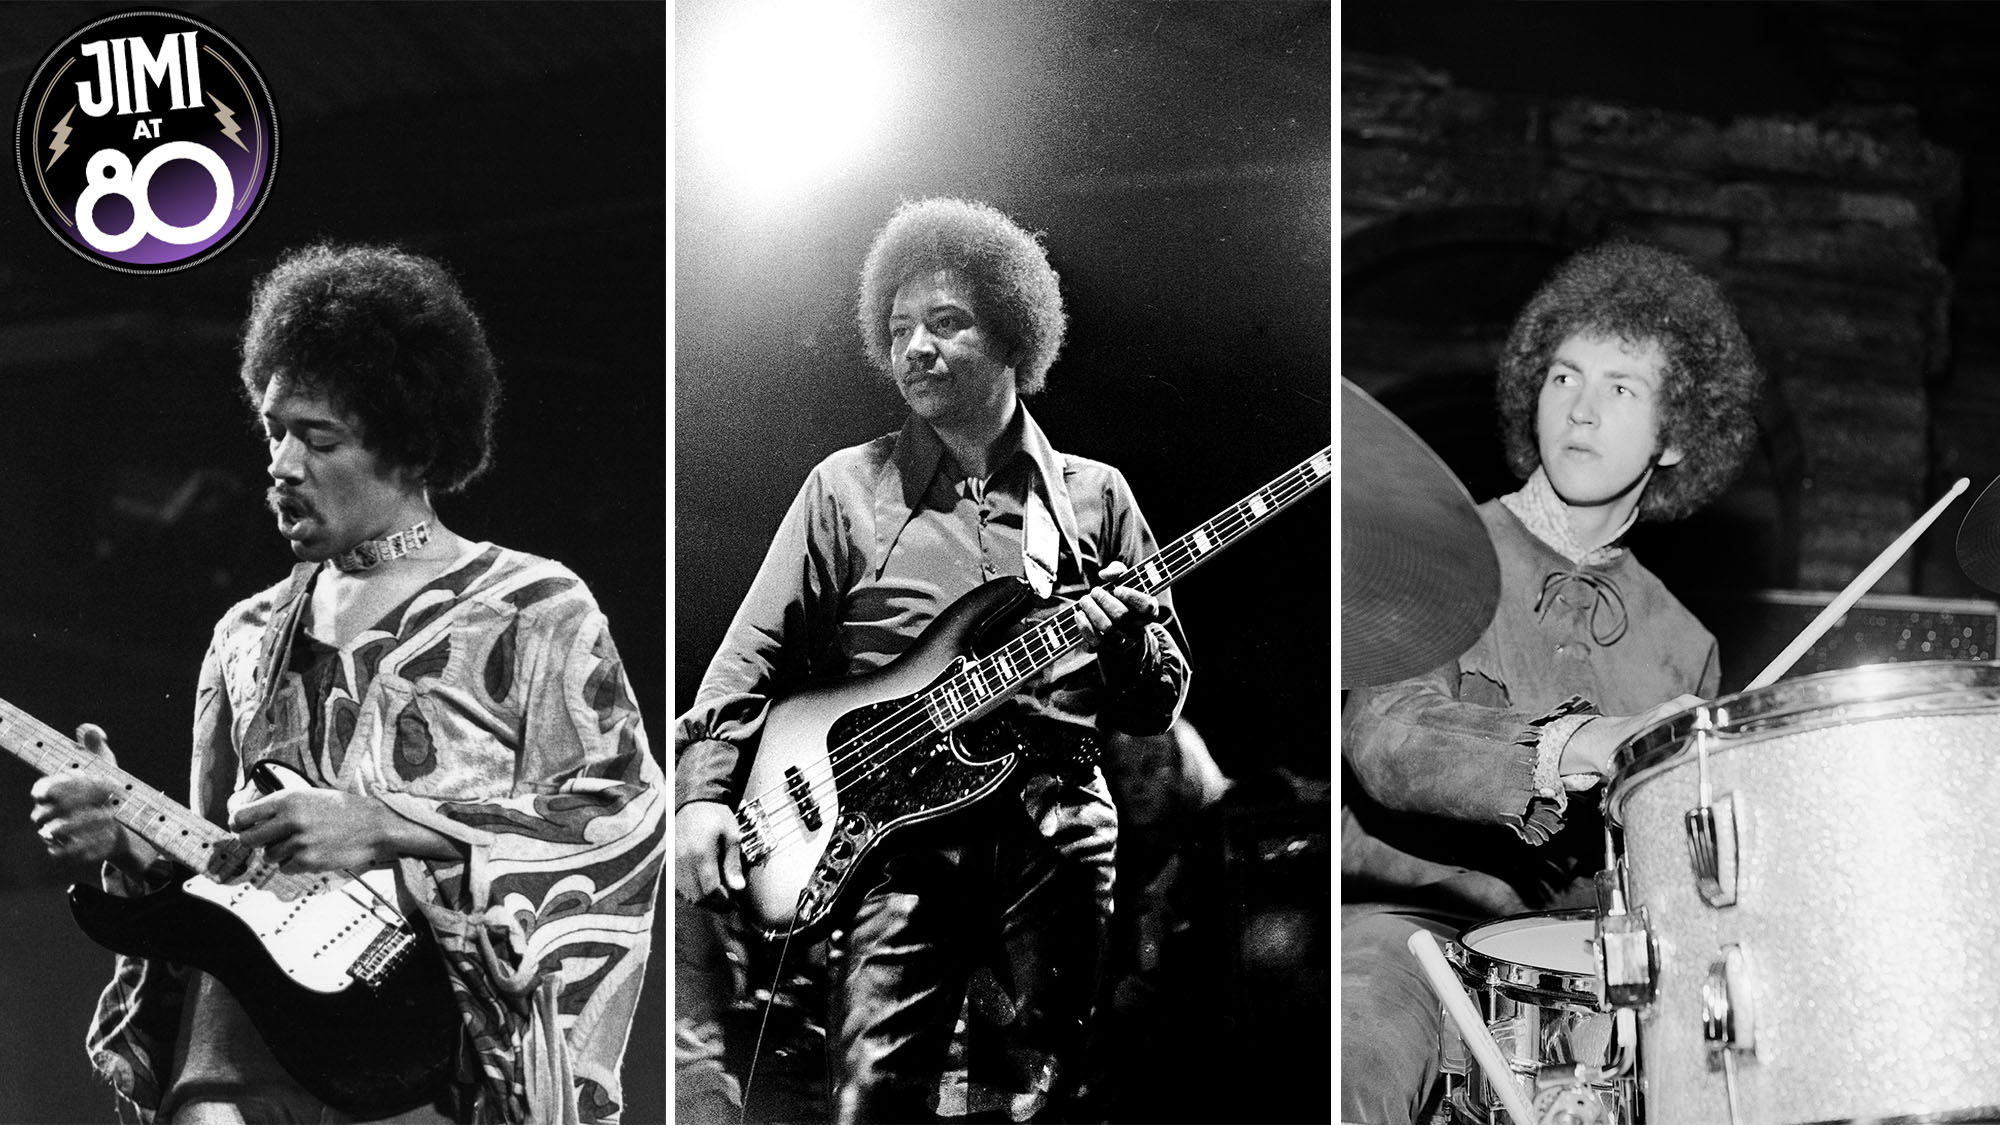 Hey Joe by The Jimi Hendrix Experience - Daily Song Facts